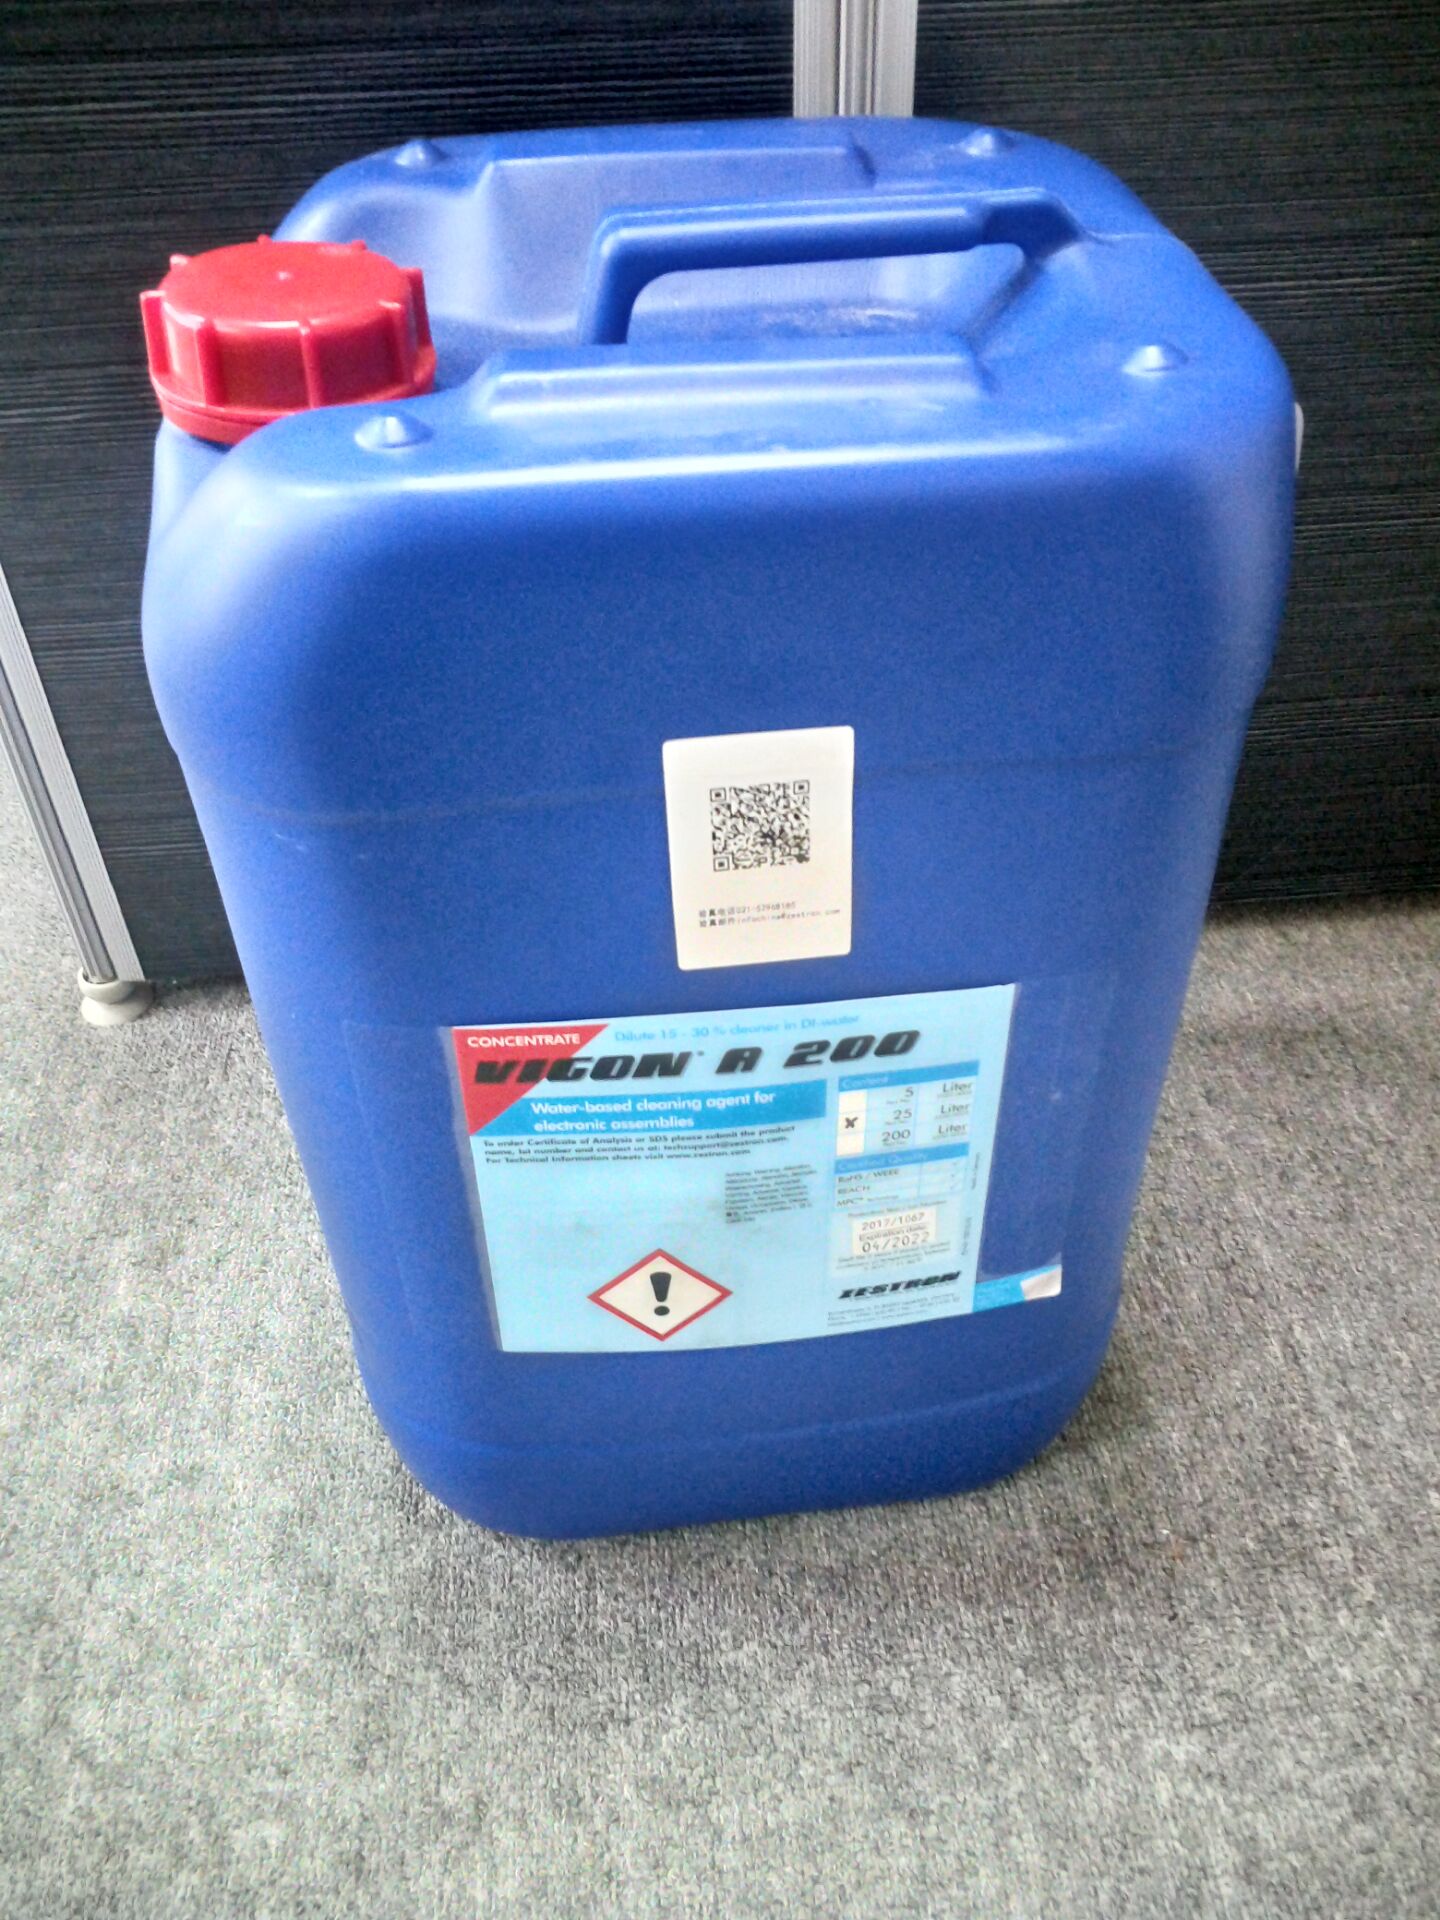 ZESTRON VIGON A201/N600水基环保型助焊剂清洗剂